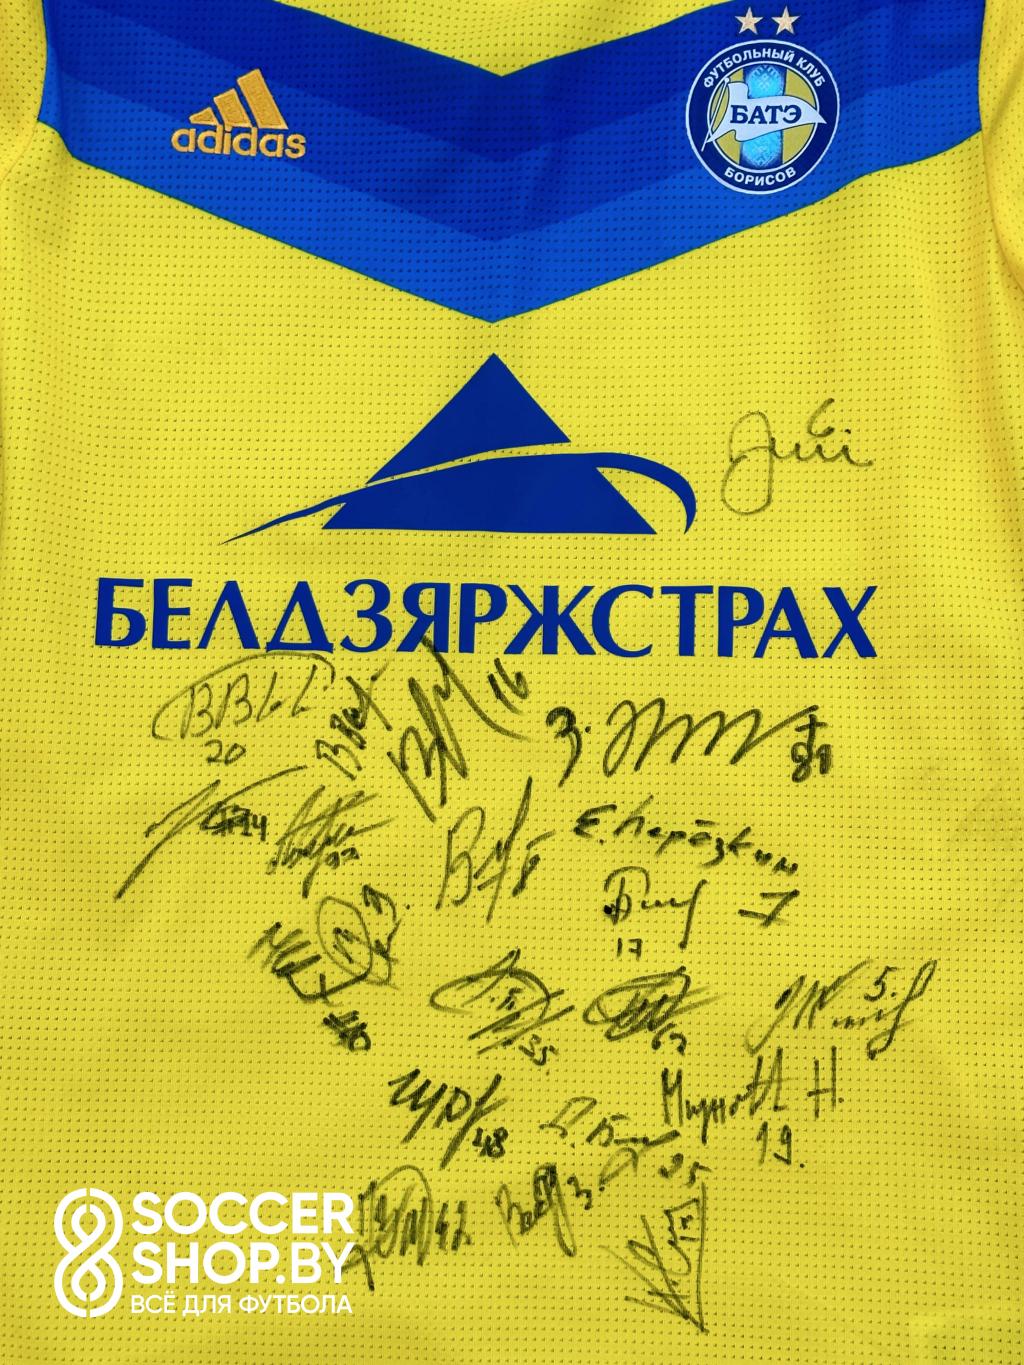 Футболка БАТЭ Неманьи Милуновича сезона 2017